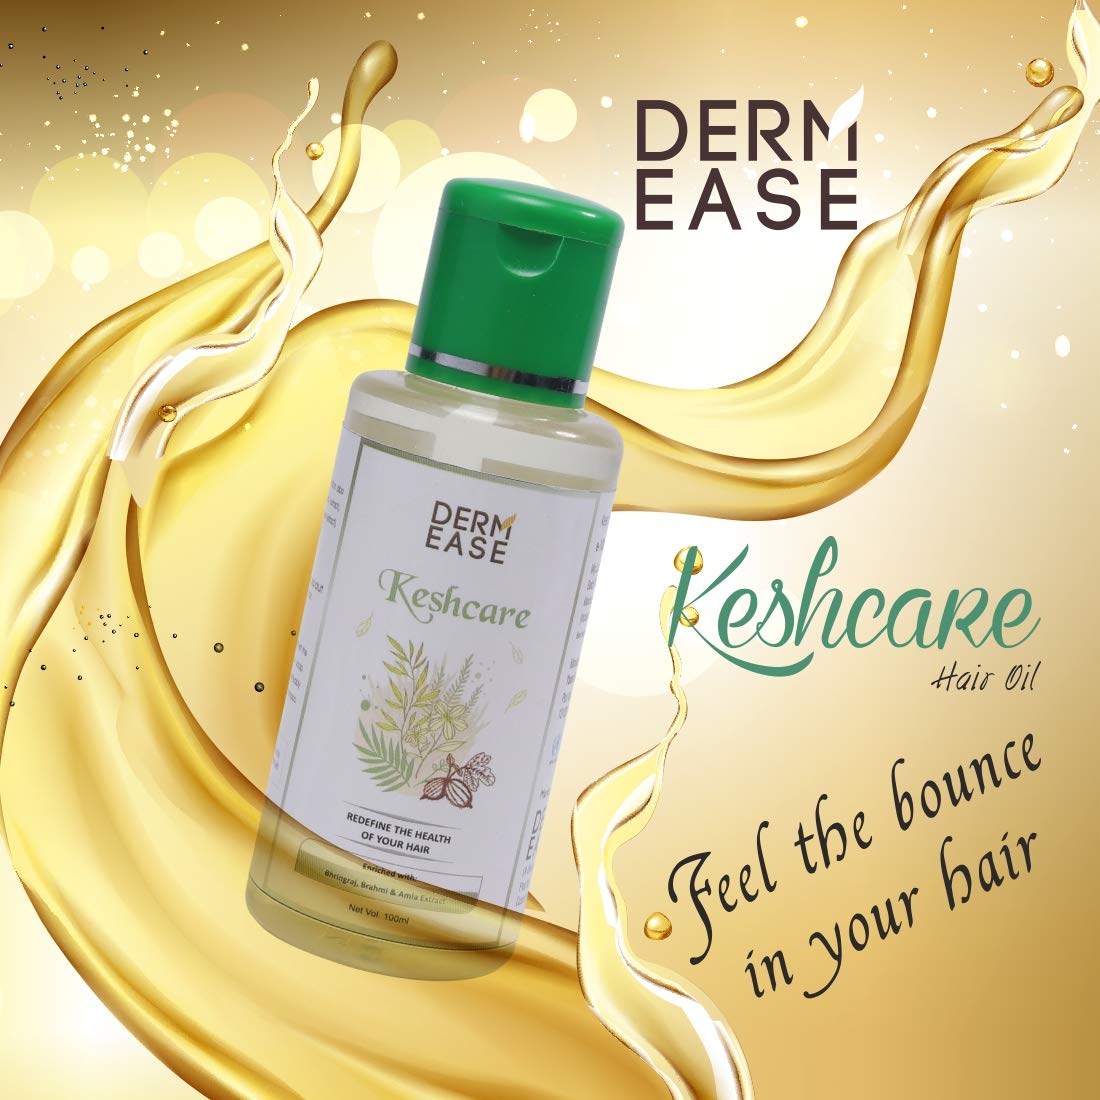 DERM EASE Keshcare Hair Oil